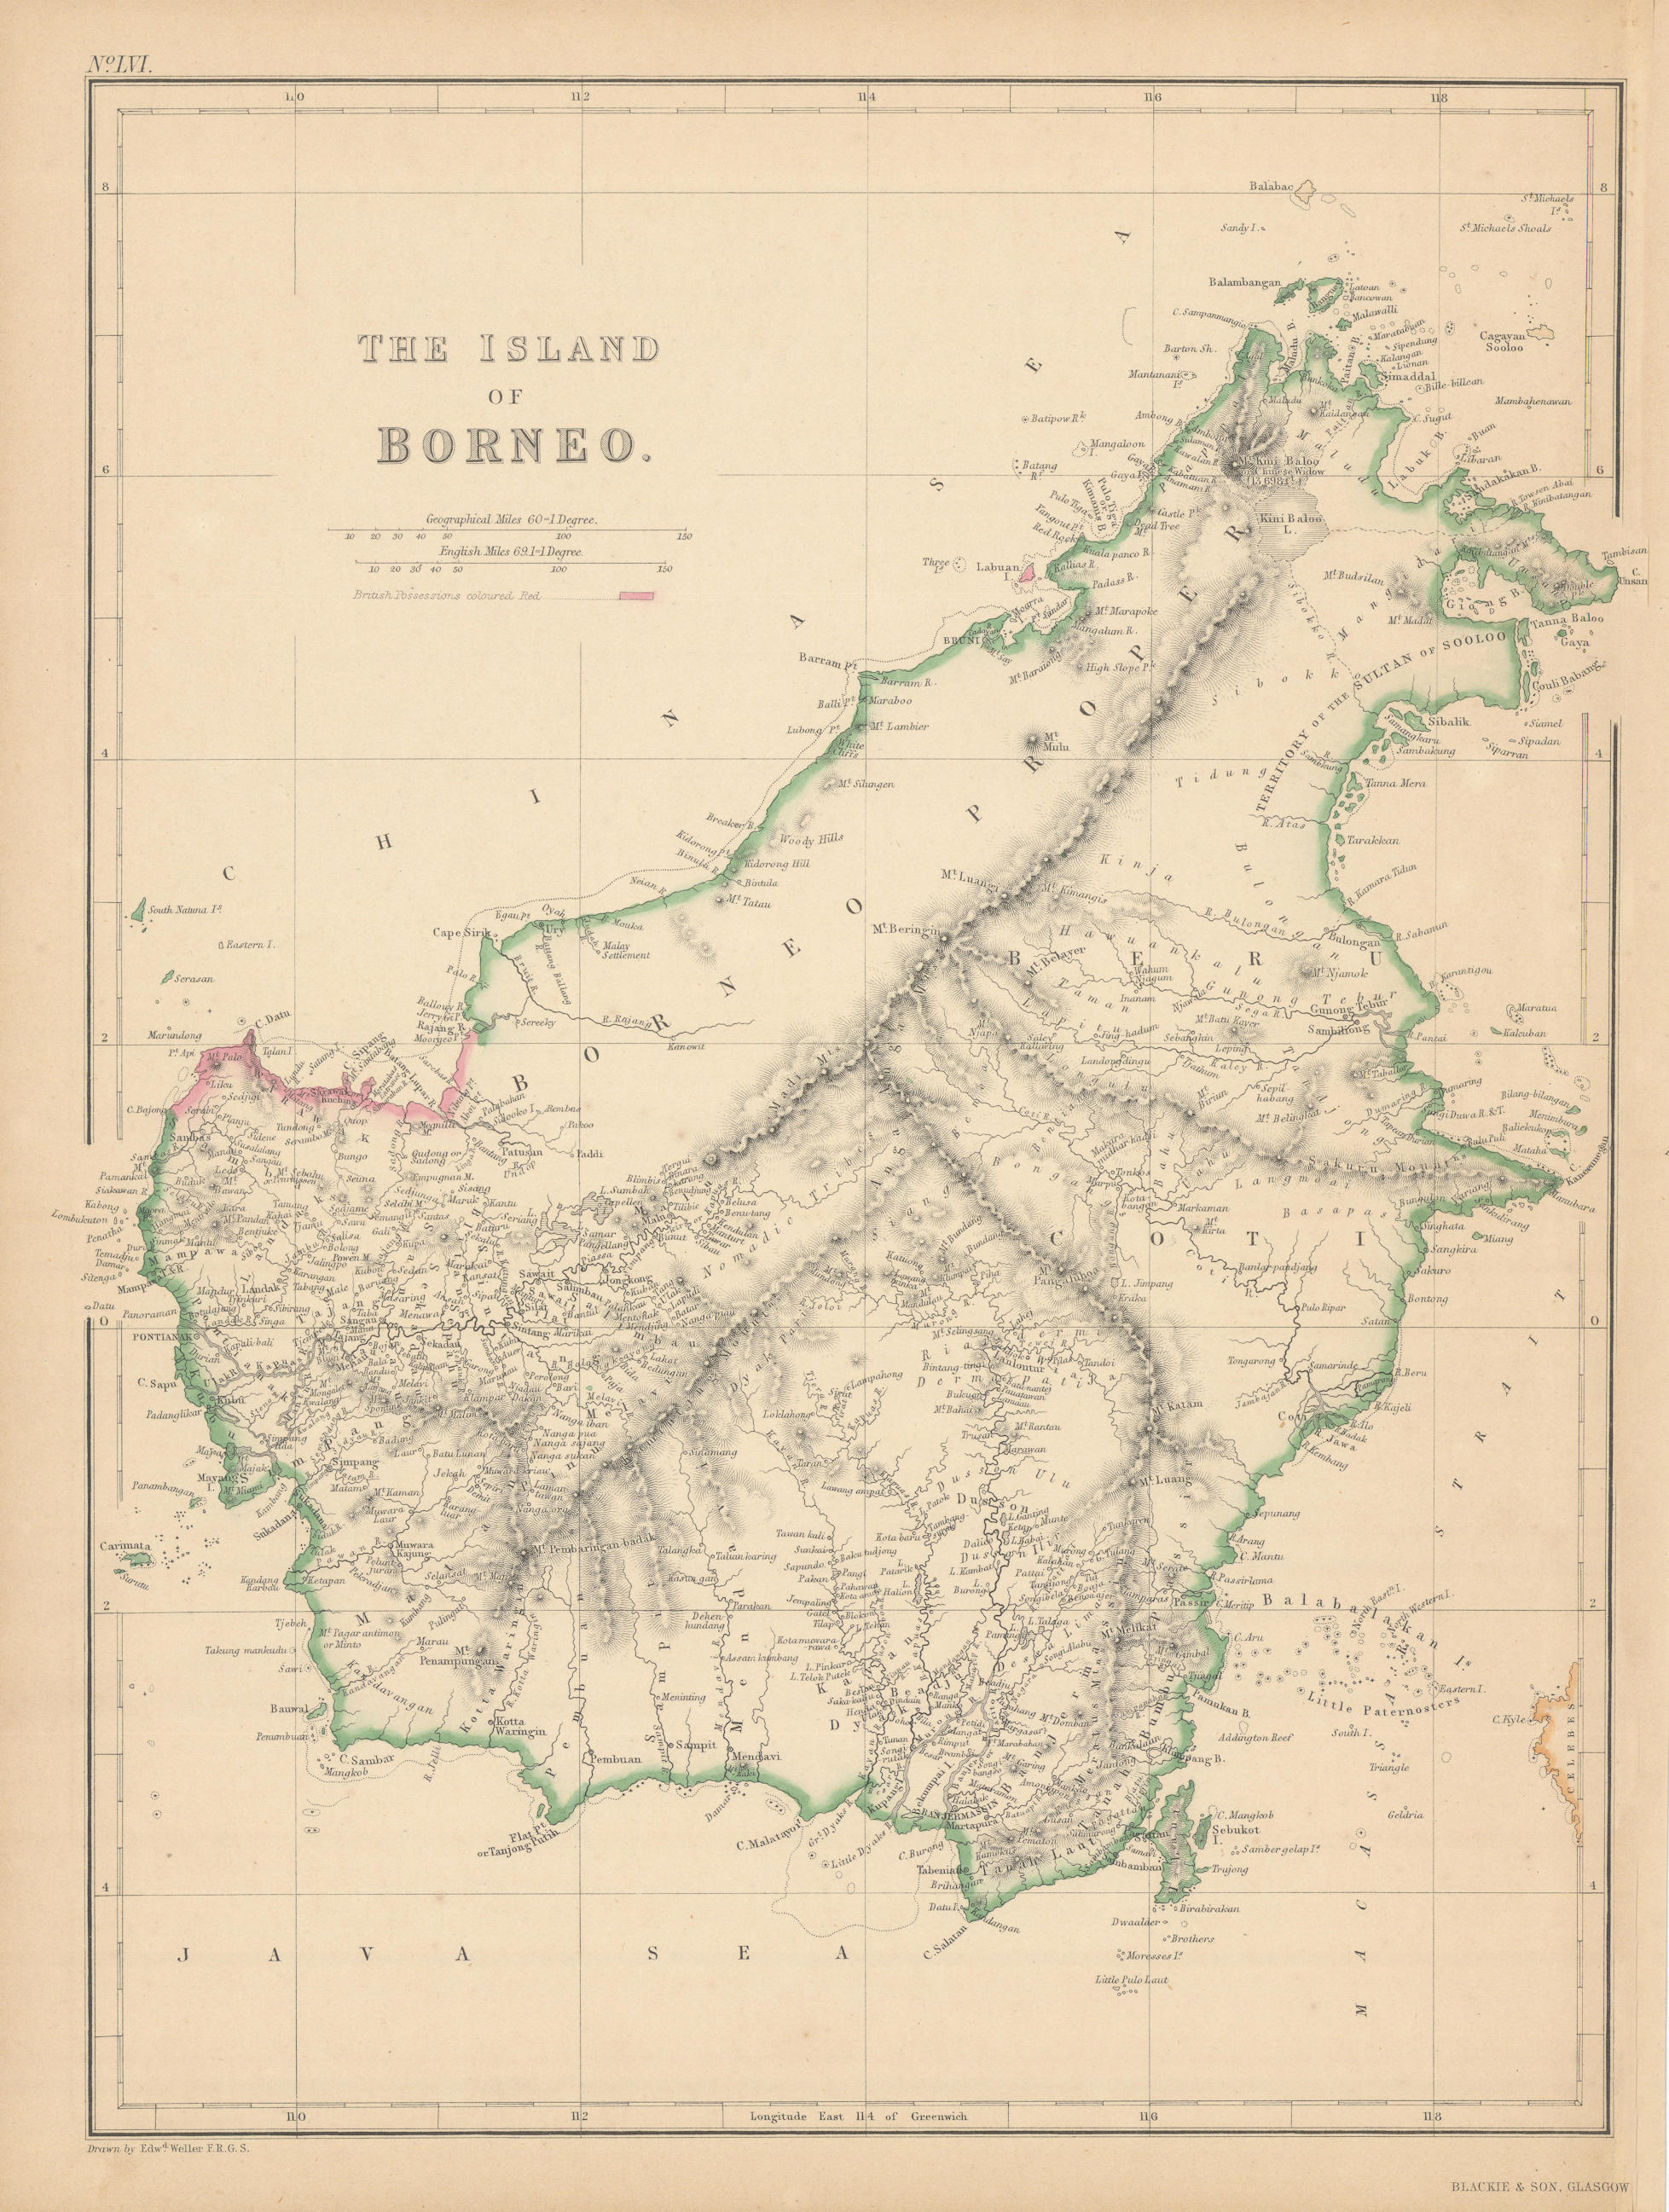 The Island of Borneo by Edward Weller. Sarawak Sabah Brunei Kalimantan 1859 map